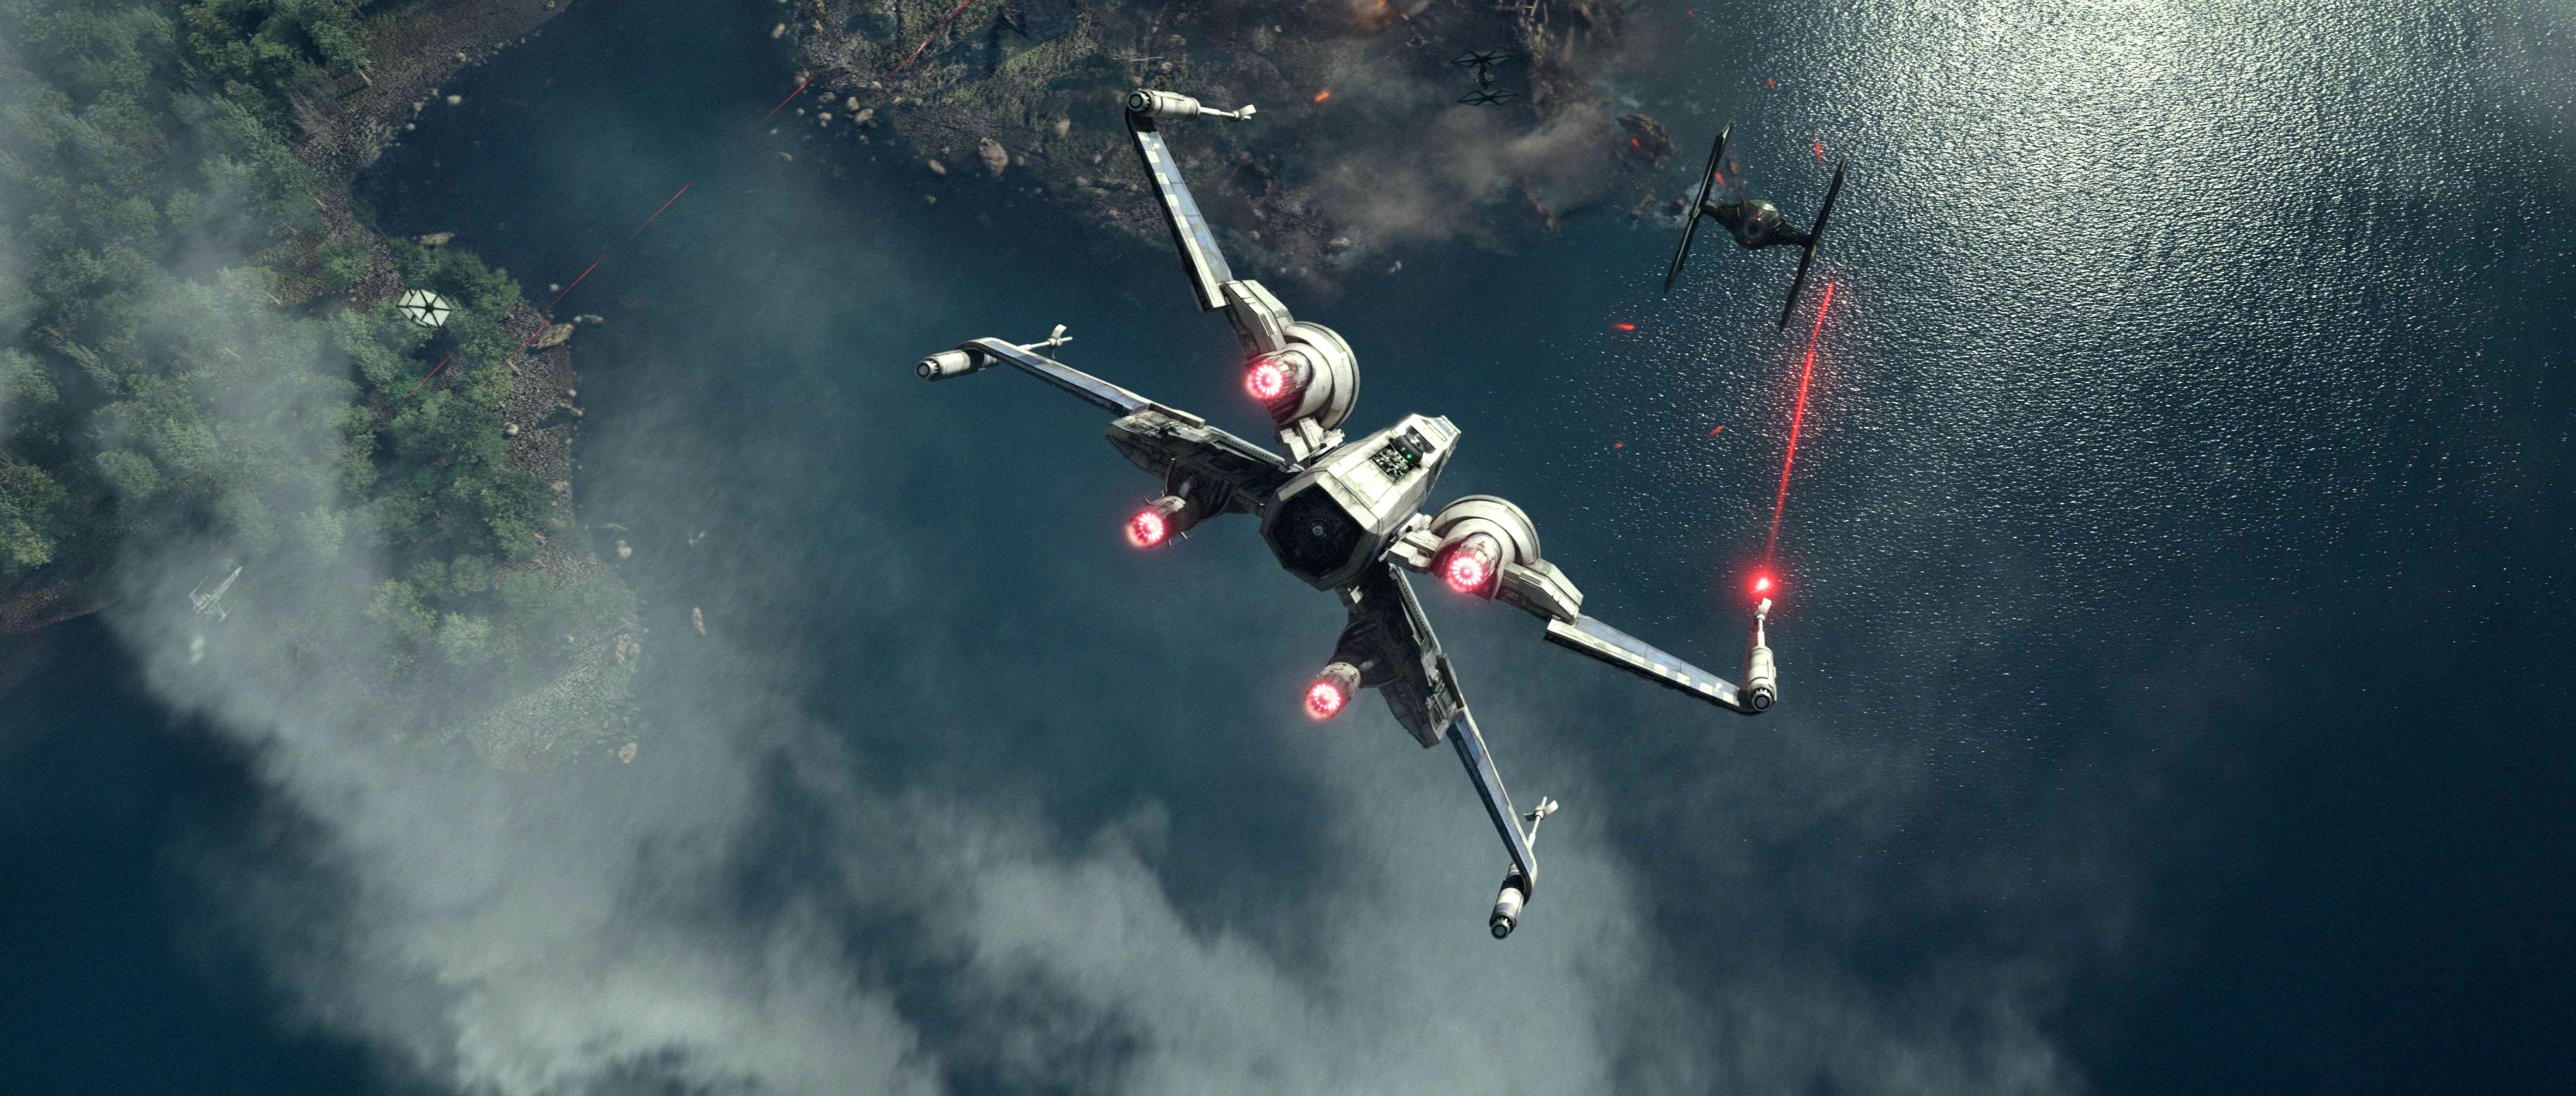 3656x1556 STAR WARS FORCE AWAKENS sci-fi futuristic disney 1star-wars-force-awakens  action adventure spaceship battle wallpaper |  | 821384 |  WallpaperUP